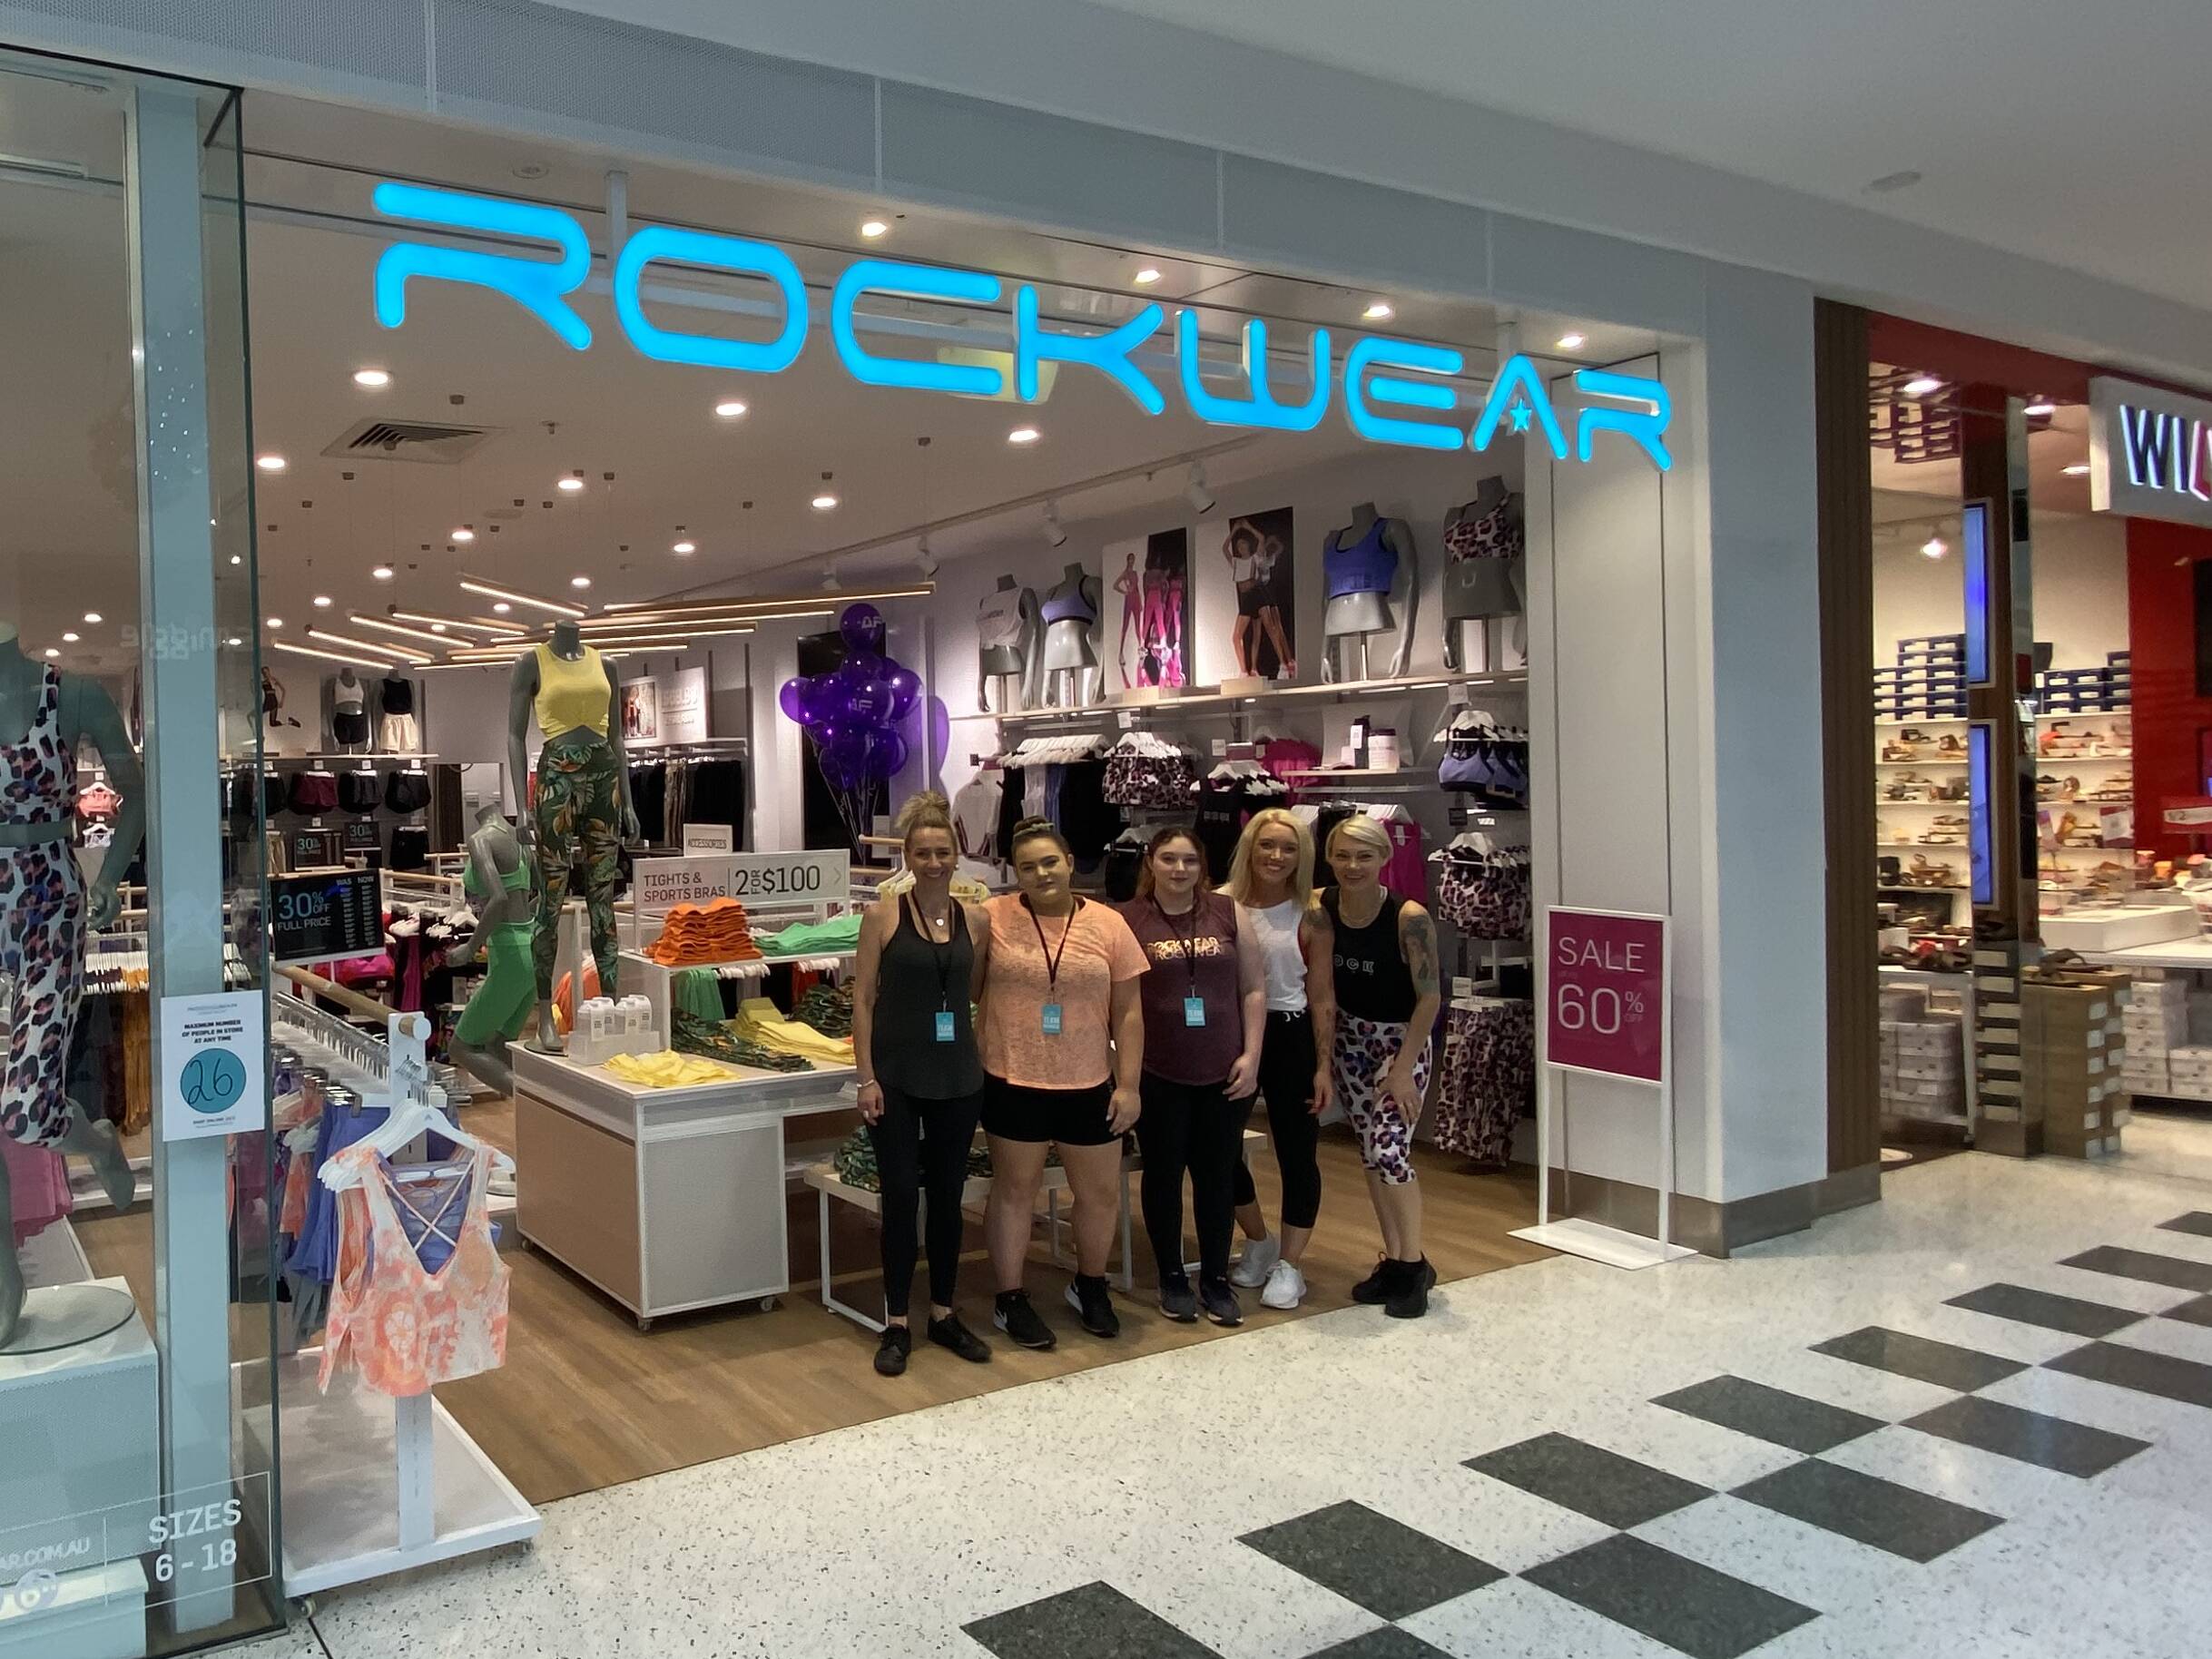 Rockwear opens at Dubbo's Orana Mall, Daily Liberal